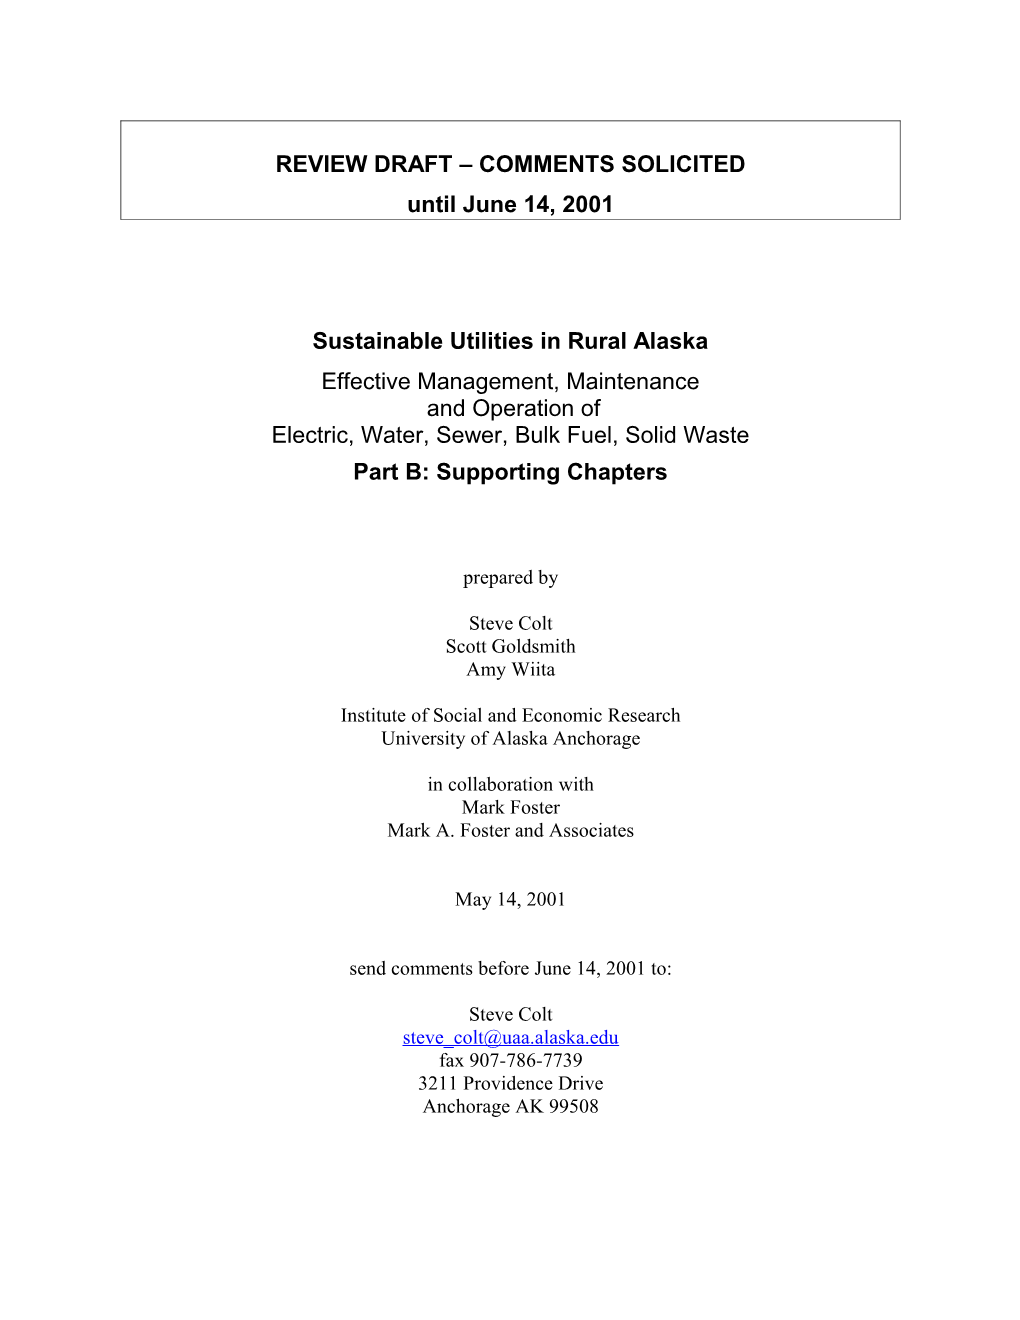 Rural Alaska Utilities Study